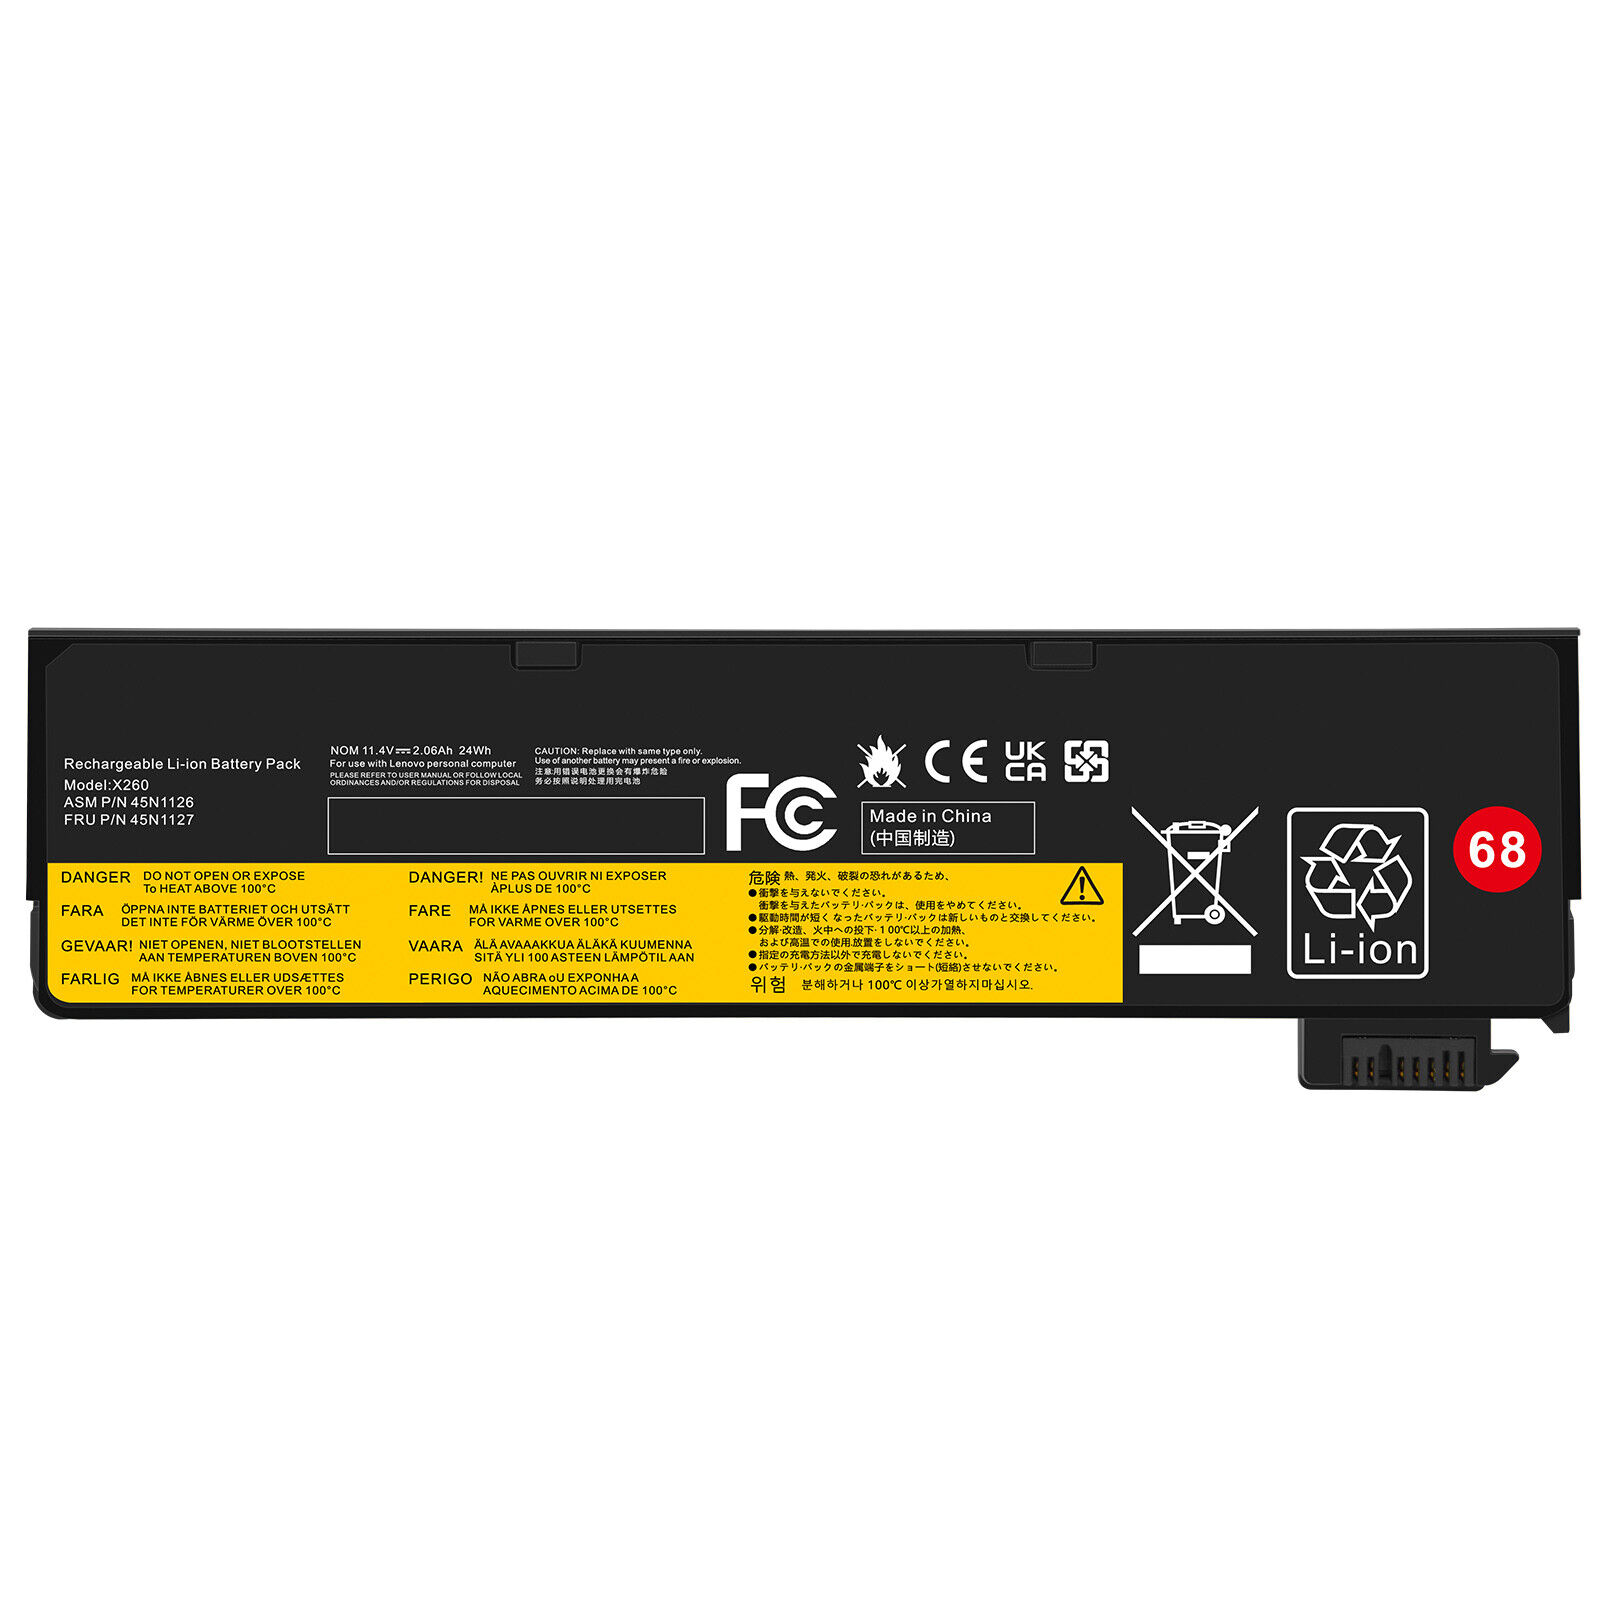 68 X240 240S Genuine Battery for Lenovo Thinkpad X250 X260 X270 T440 T440S T450S